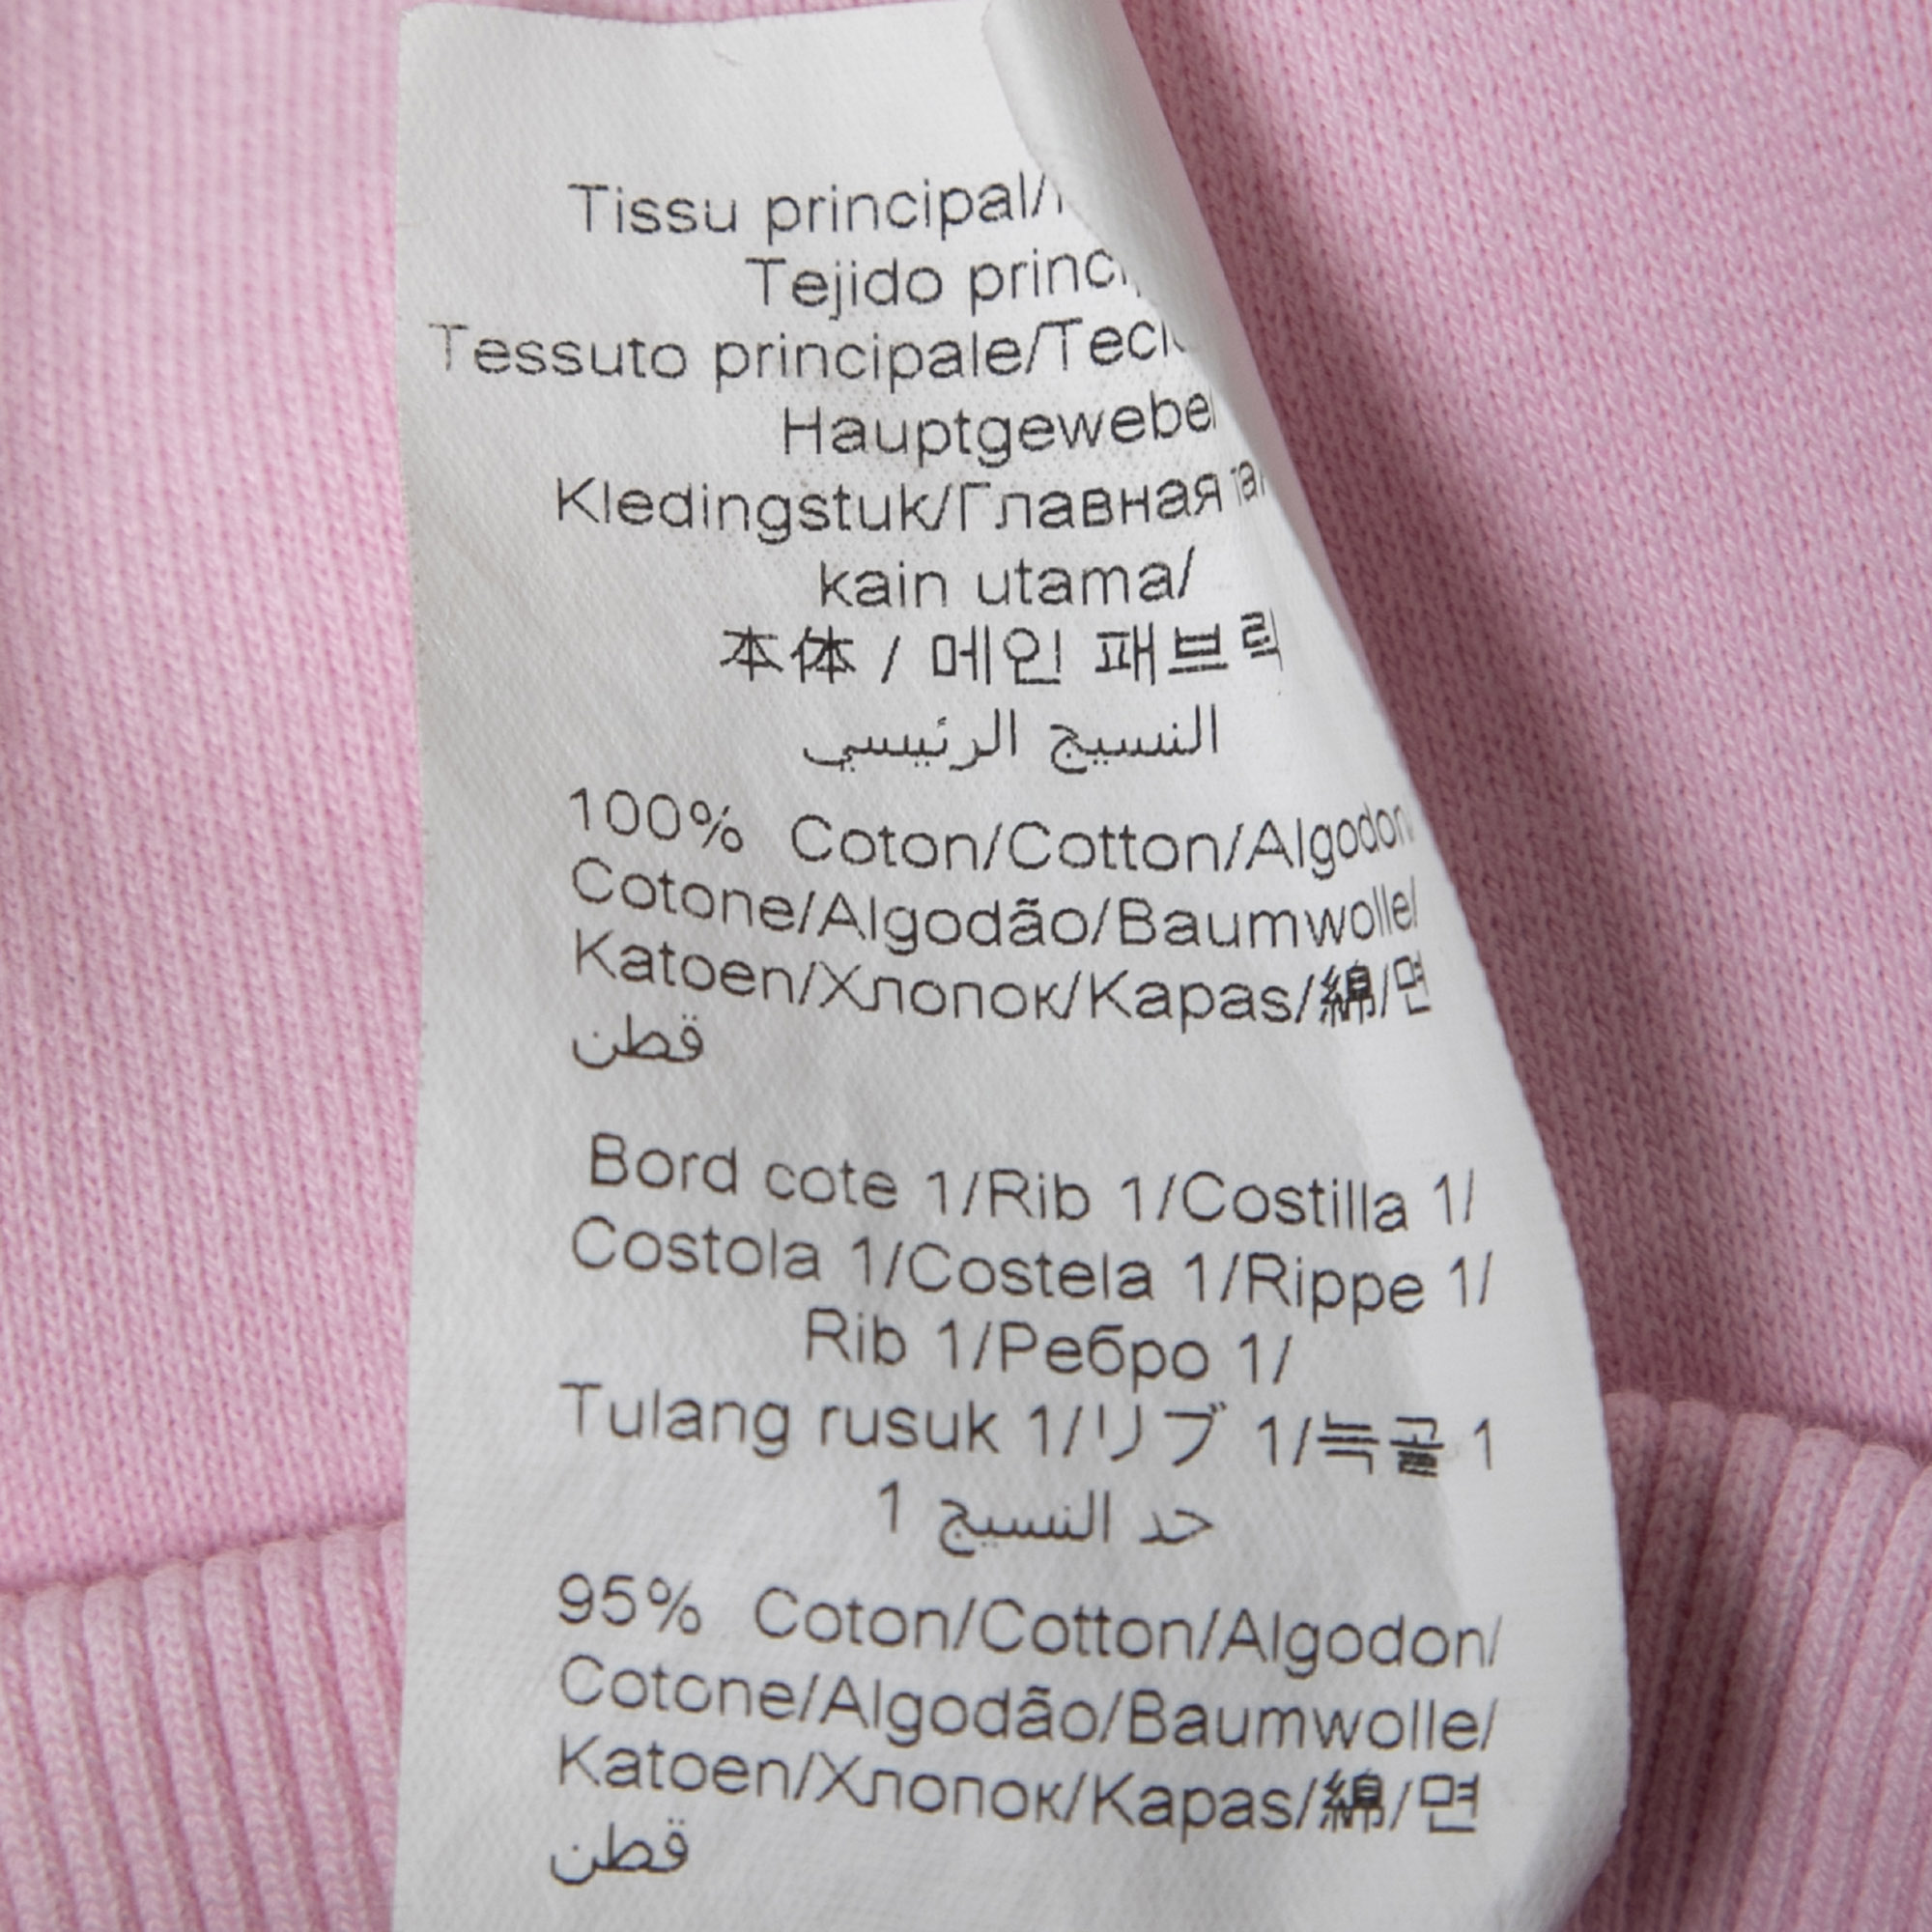 Kenzo Pink Logo Printed Cotton Knit Joggers S